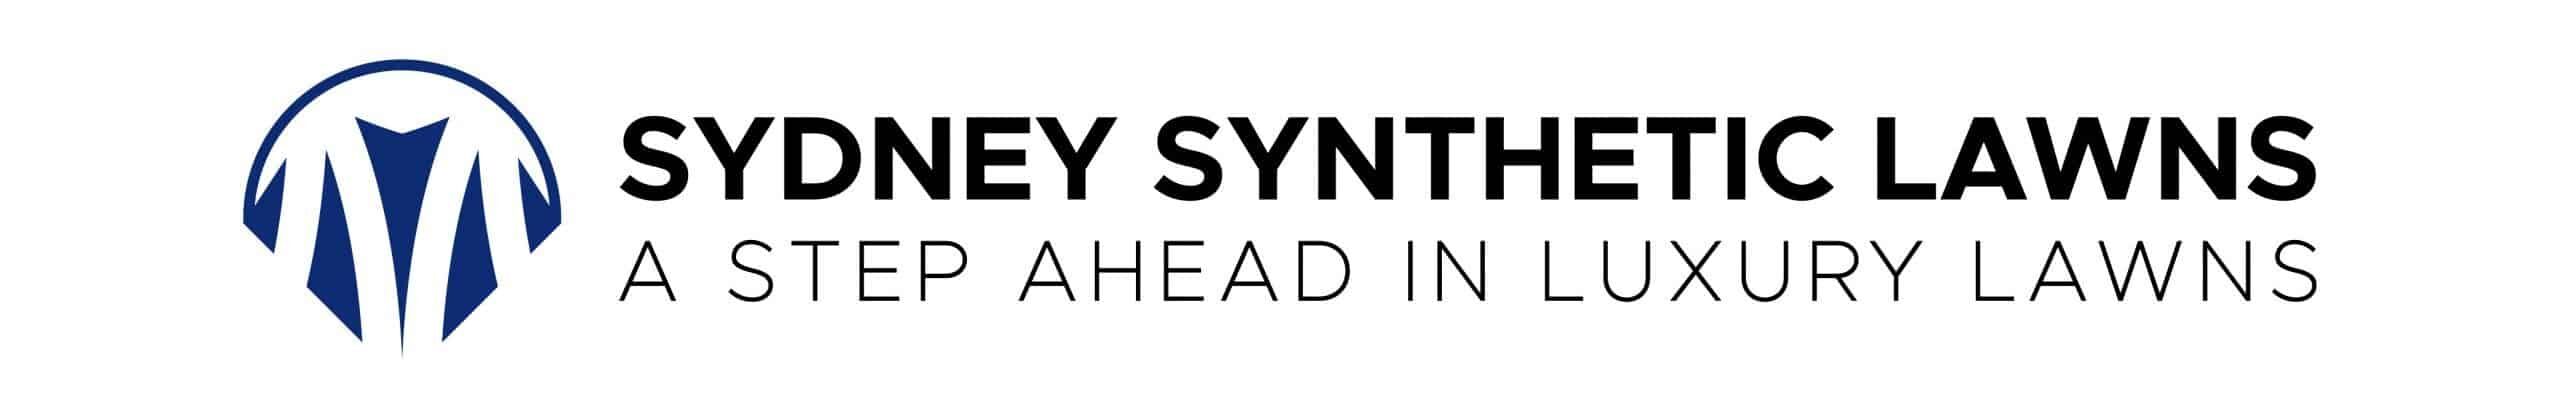 Sydney Synthetic Lawns Logo - A Step Ahead In Luxury Lawns